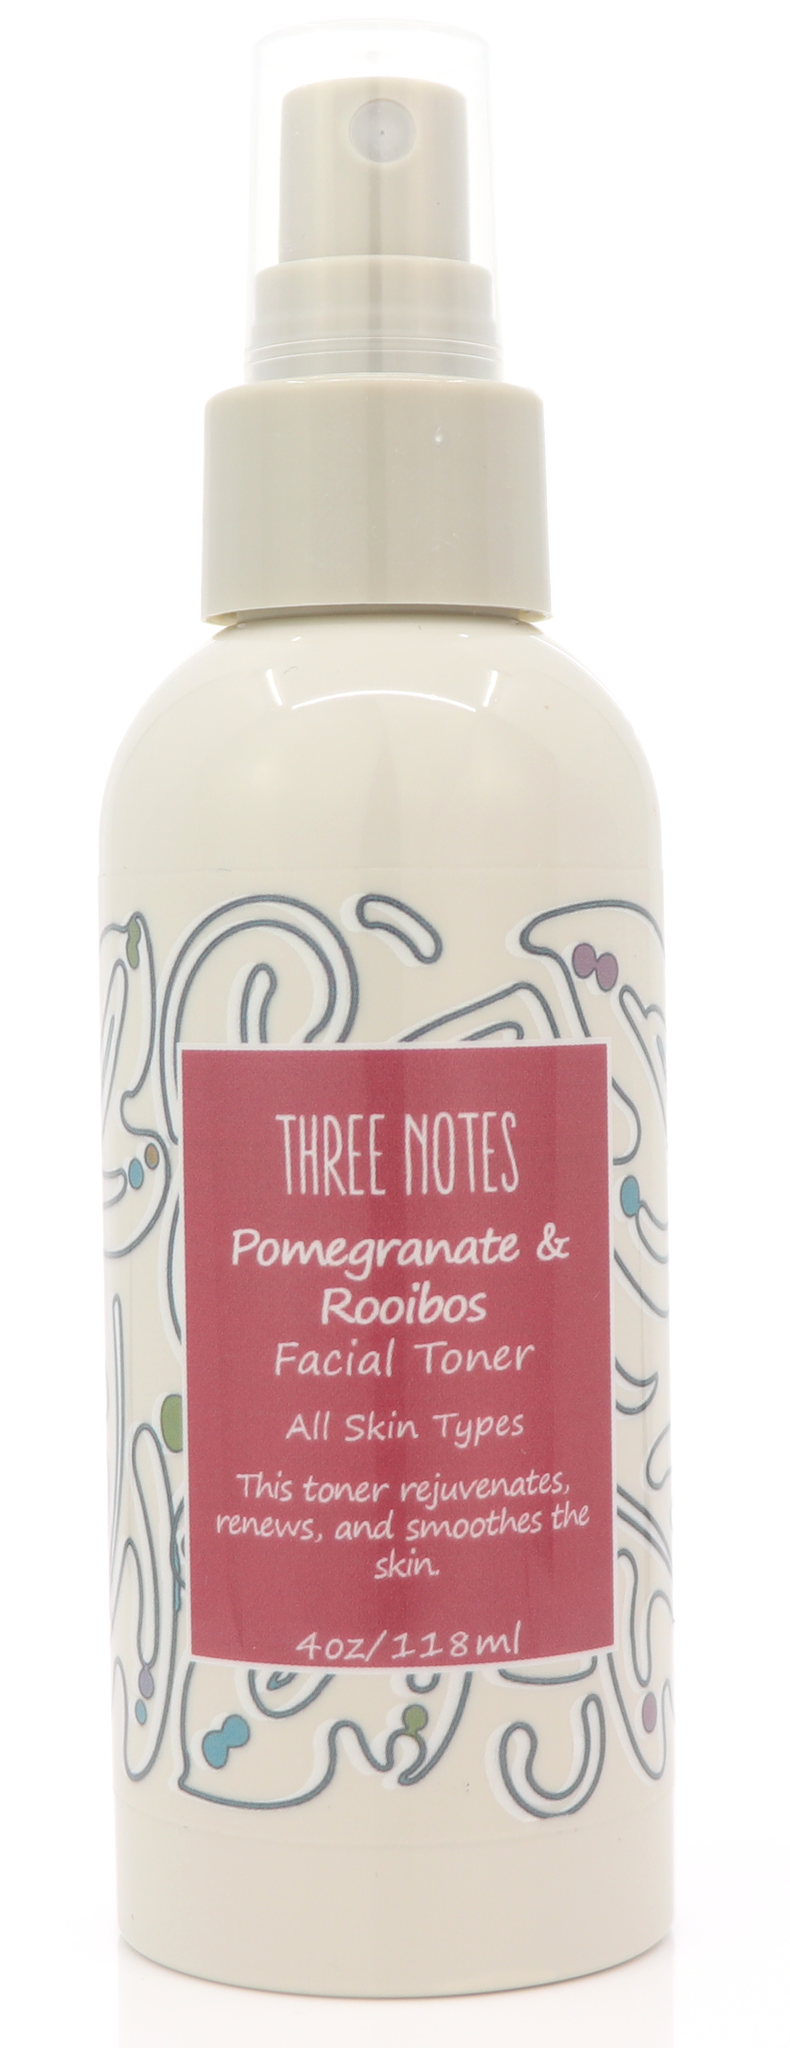 Pomegranate & Rooibos Facial Toner